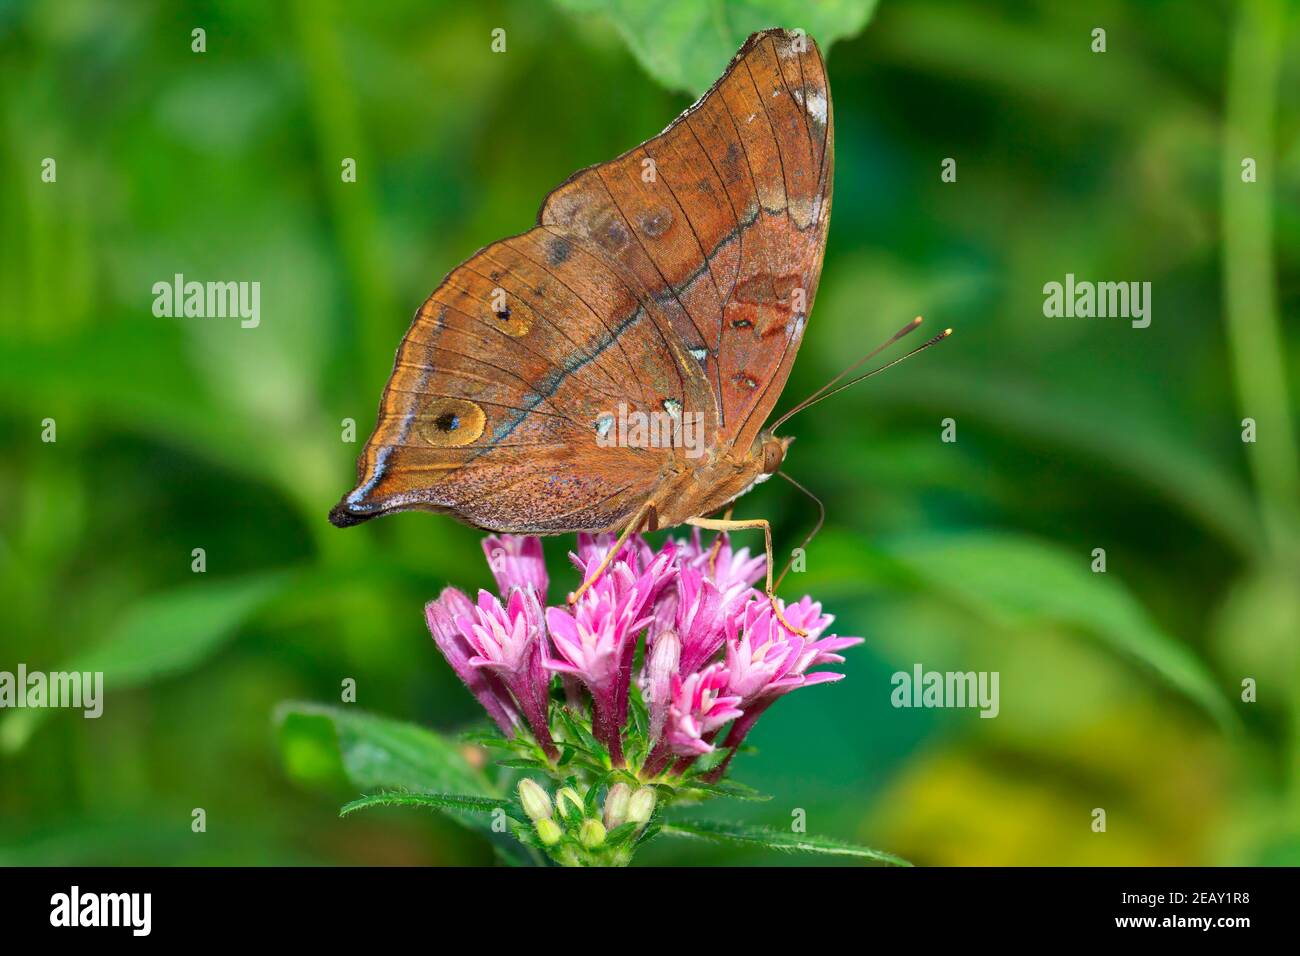 Autumn Leaf butterfly, Doleschallia bisaltide pratipa feeding on pink flower Stock Photo